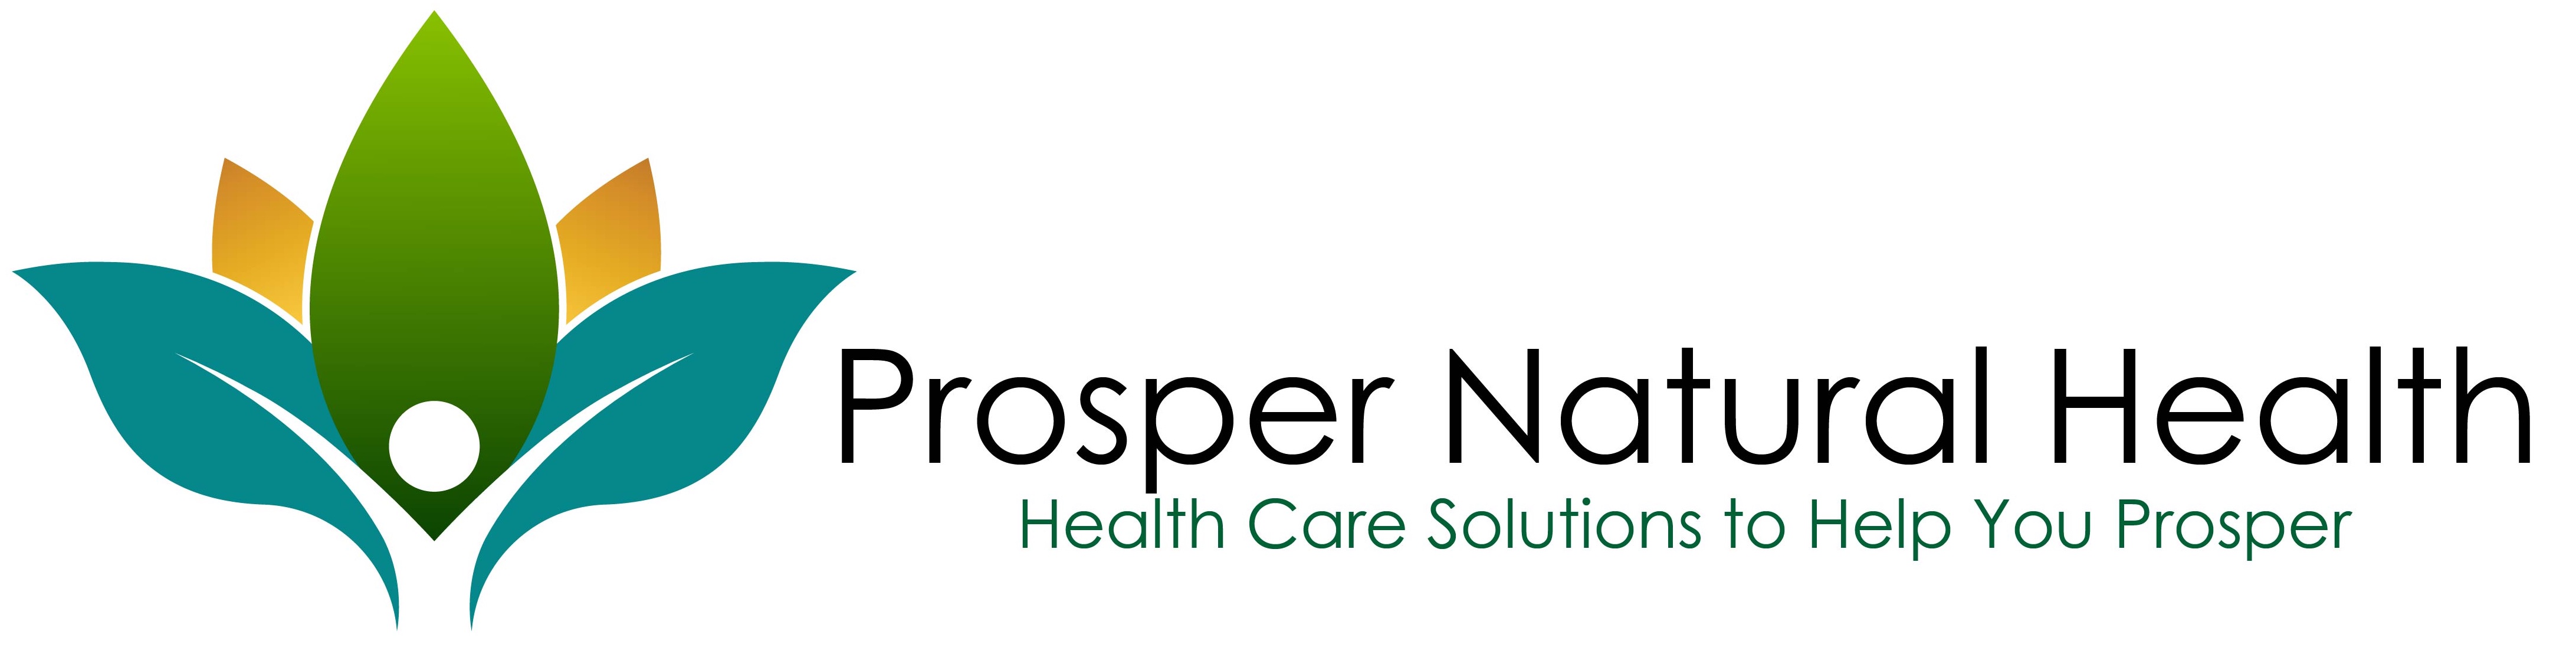 Prosper Natural Health Wellness Center Logo